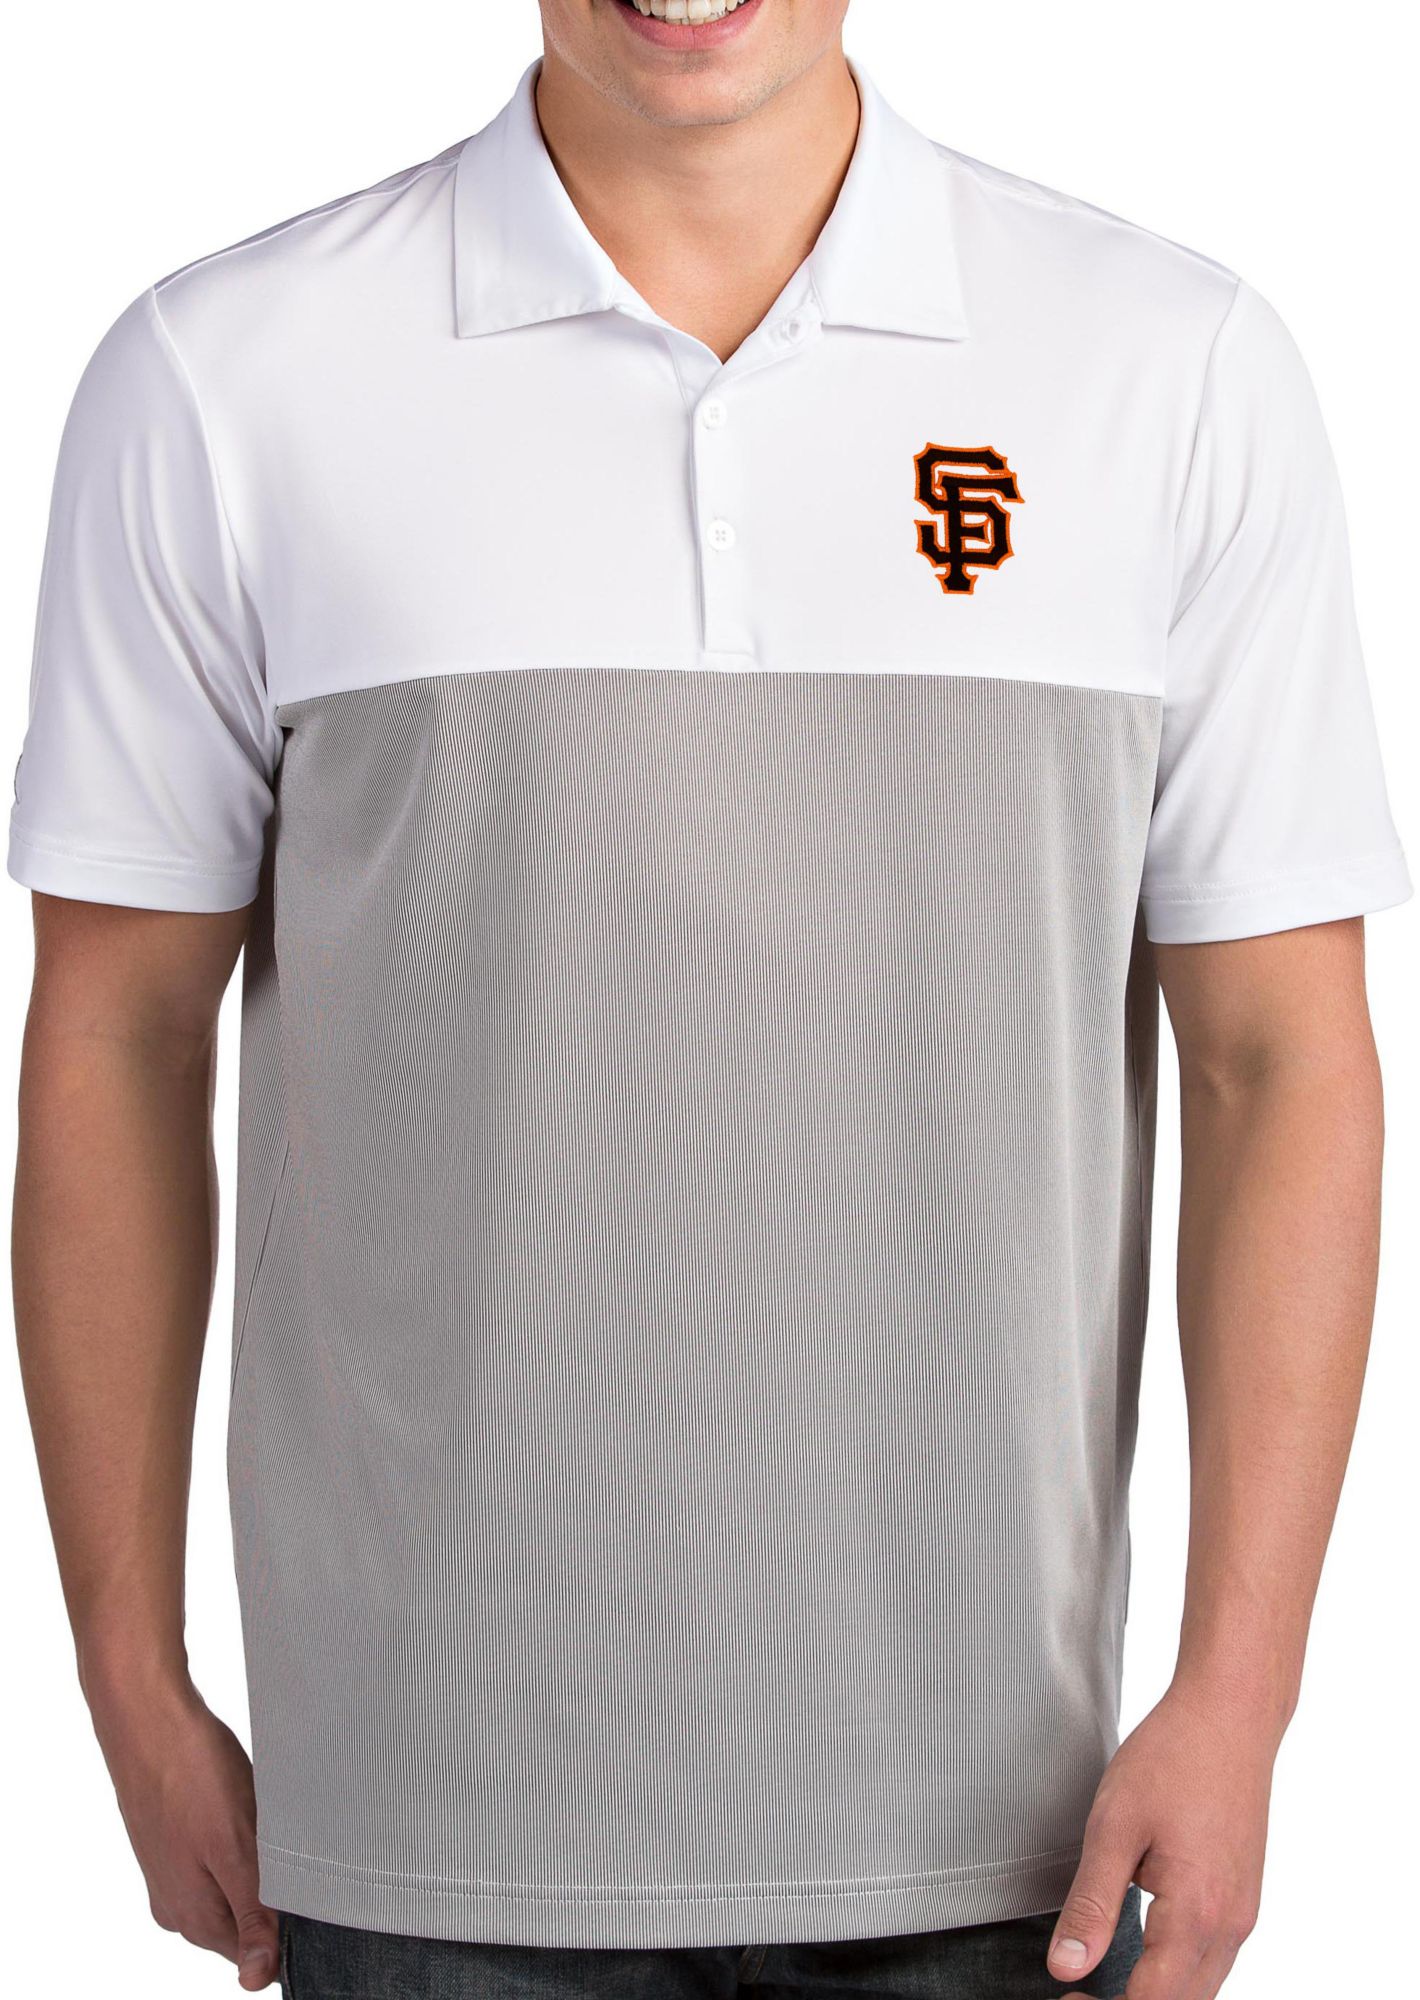 san francisco giants golf shirt